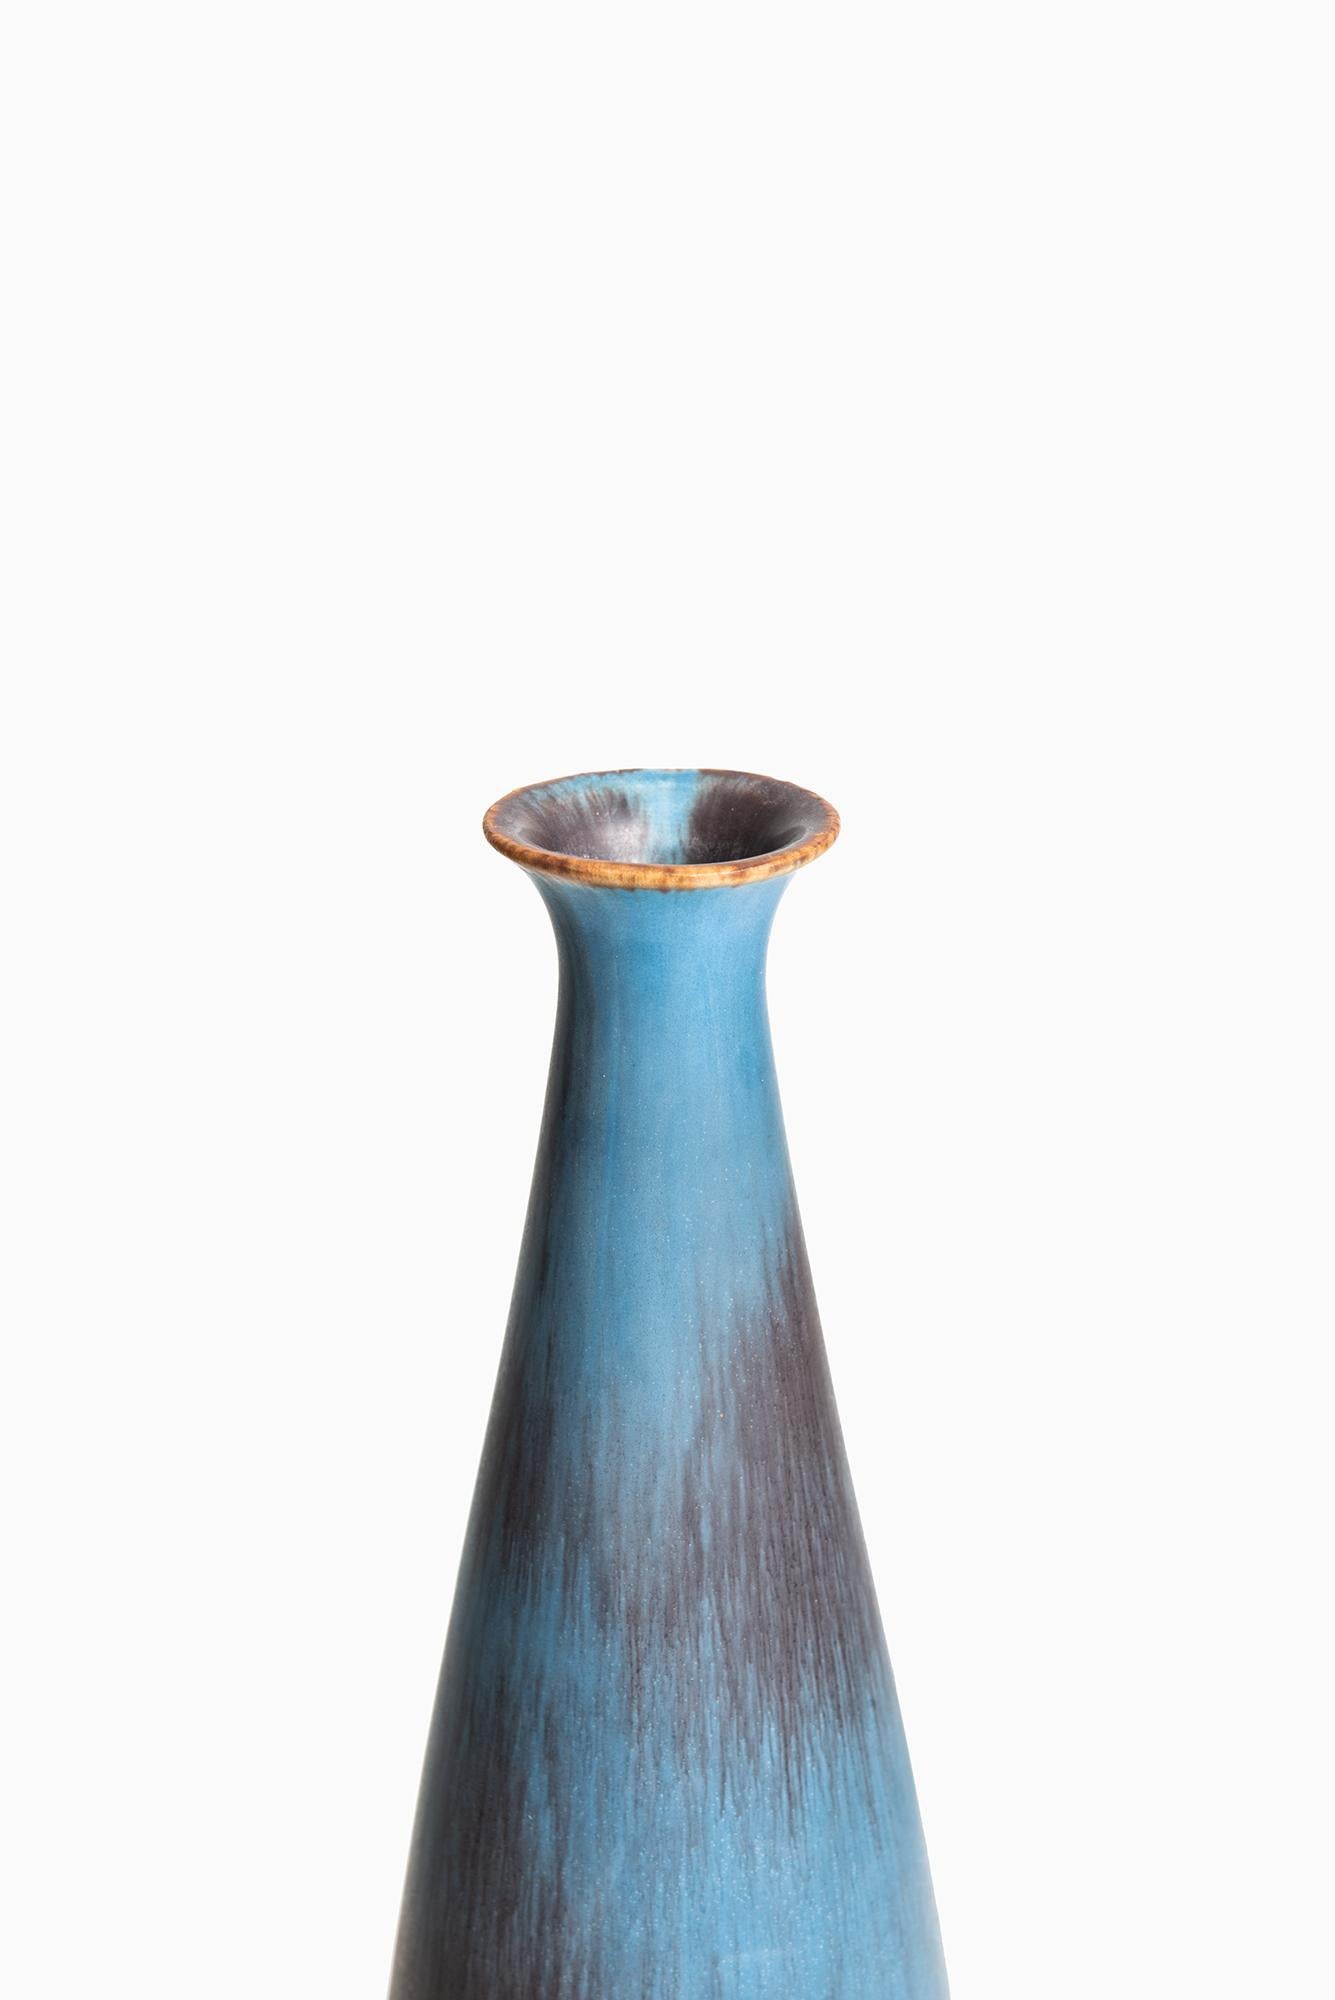 Rare ceramic vase designed by Gunnar Nylund. Produced by Rörstrand in Sweden.